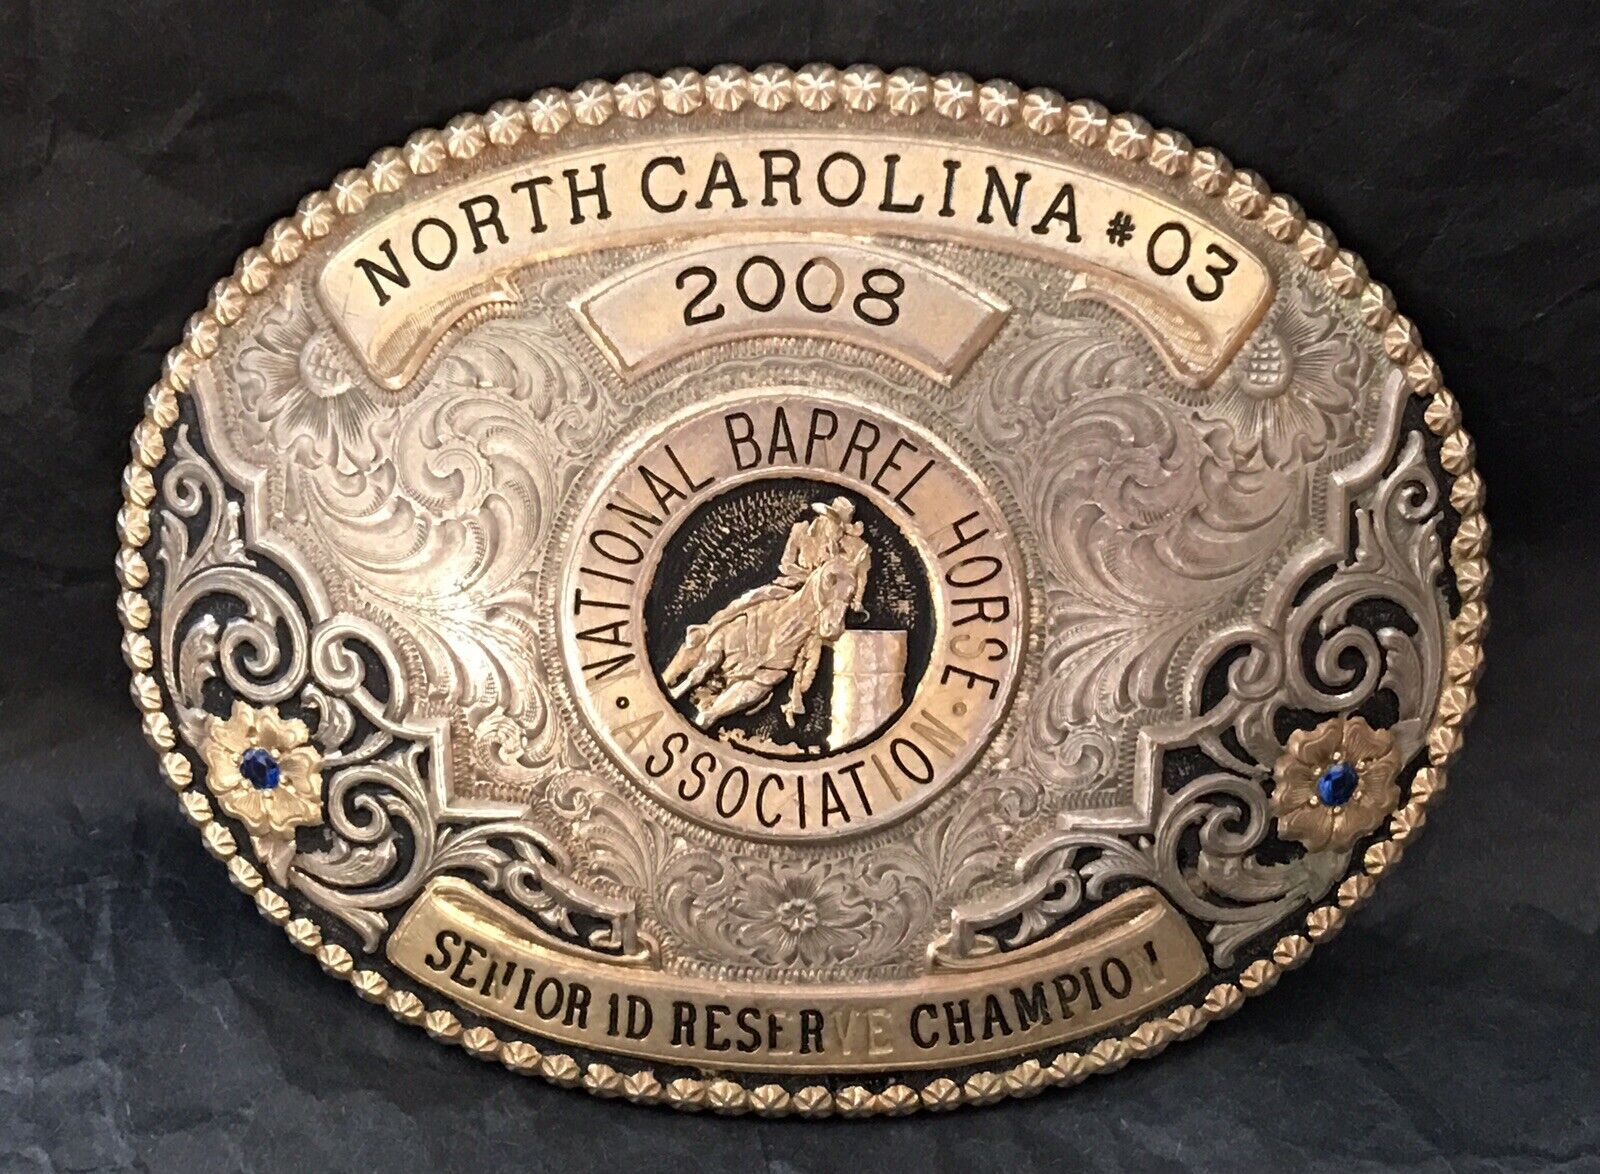 SALE Gist 2008 North Carolina NBHA National Barrels Champion Trophy Belt Buckle